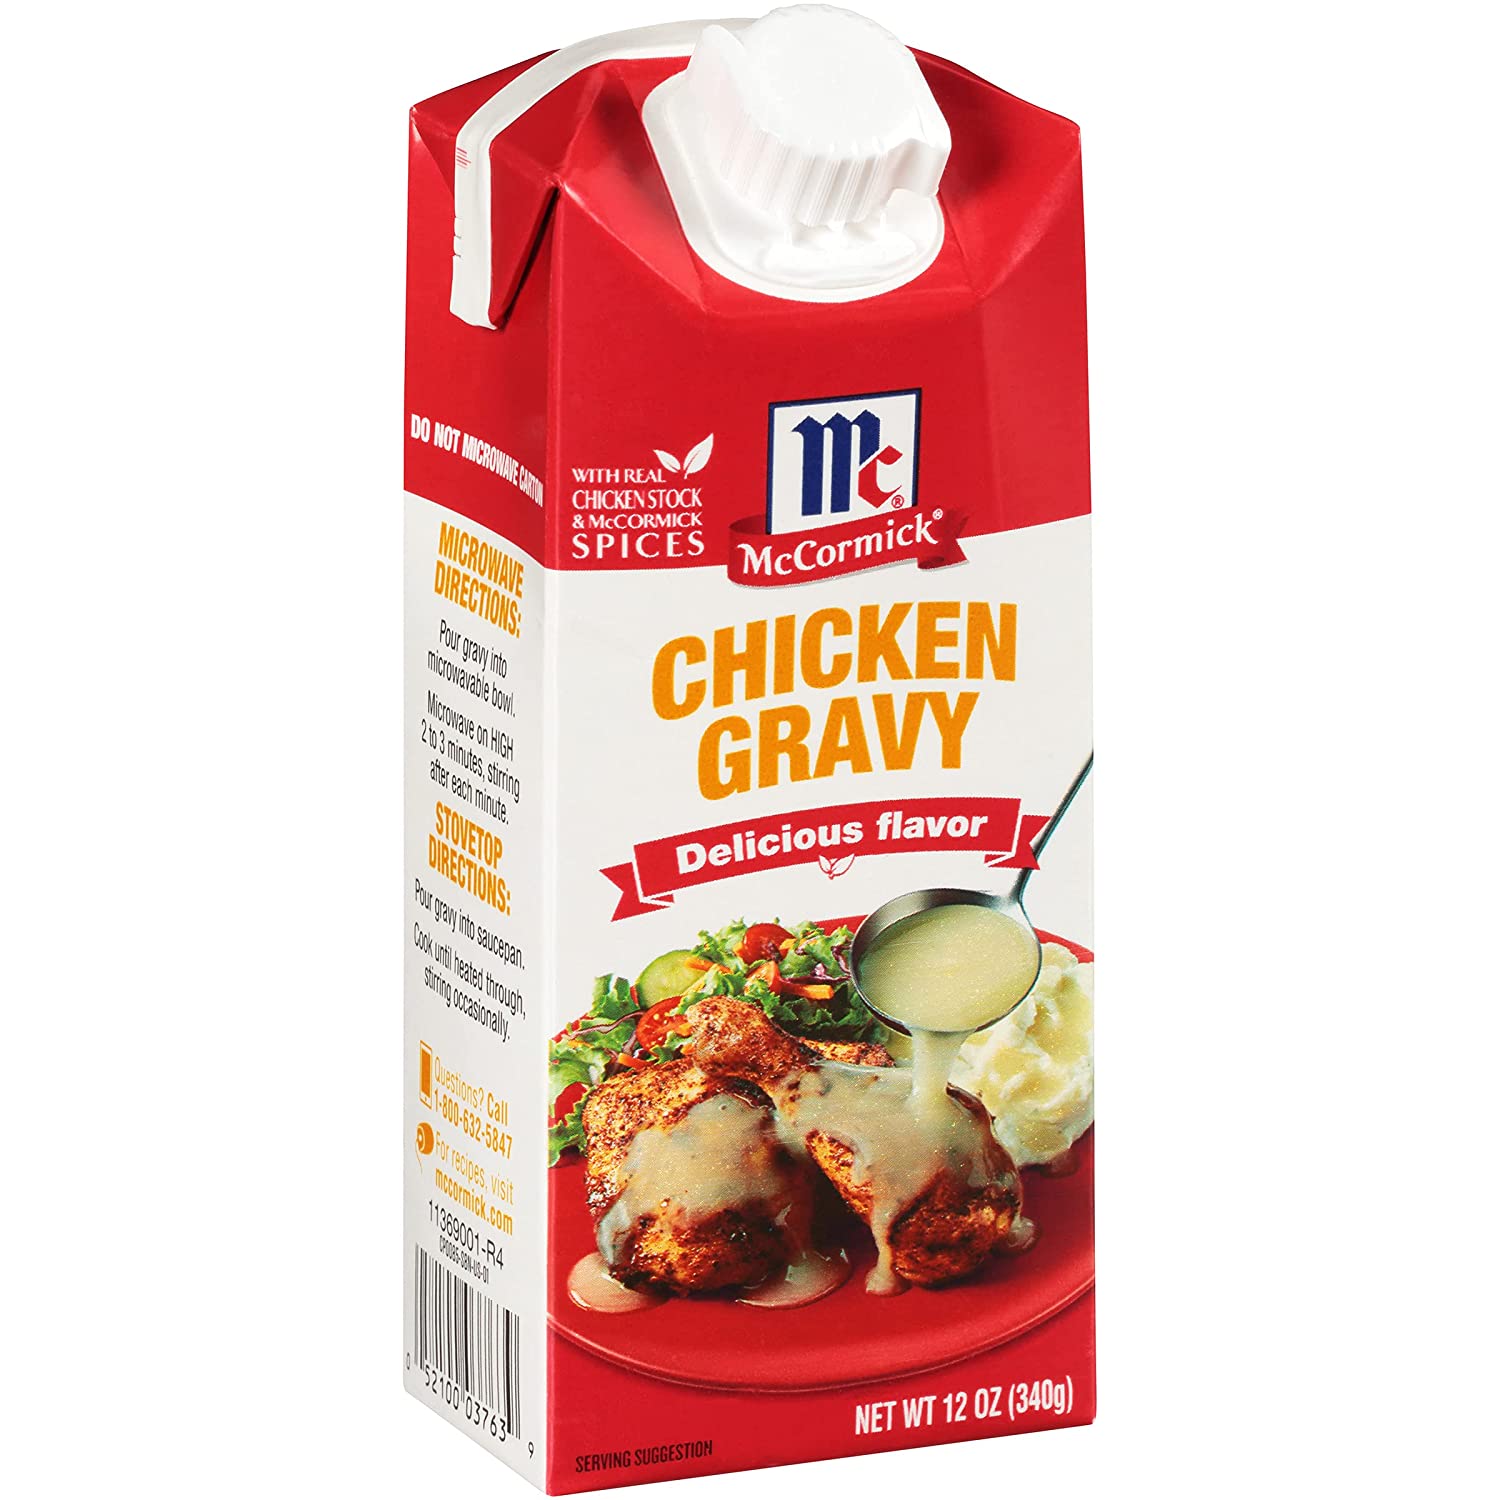 12-oz McCormick Simply Better Chicken Gravy $1.94 at Amazon